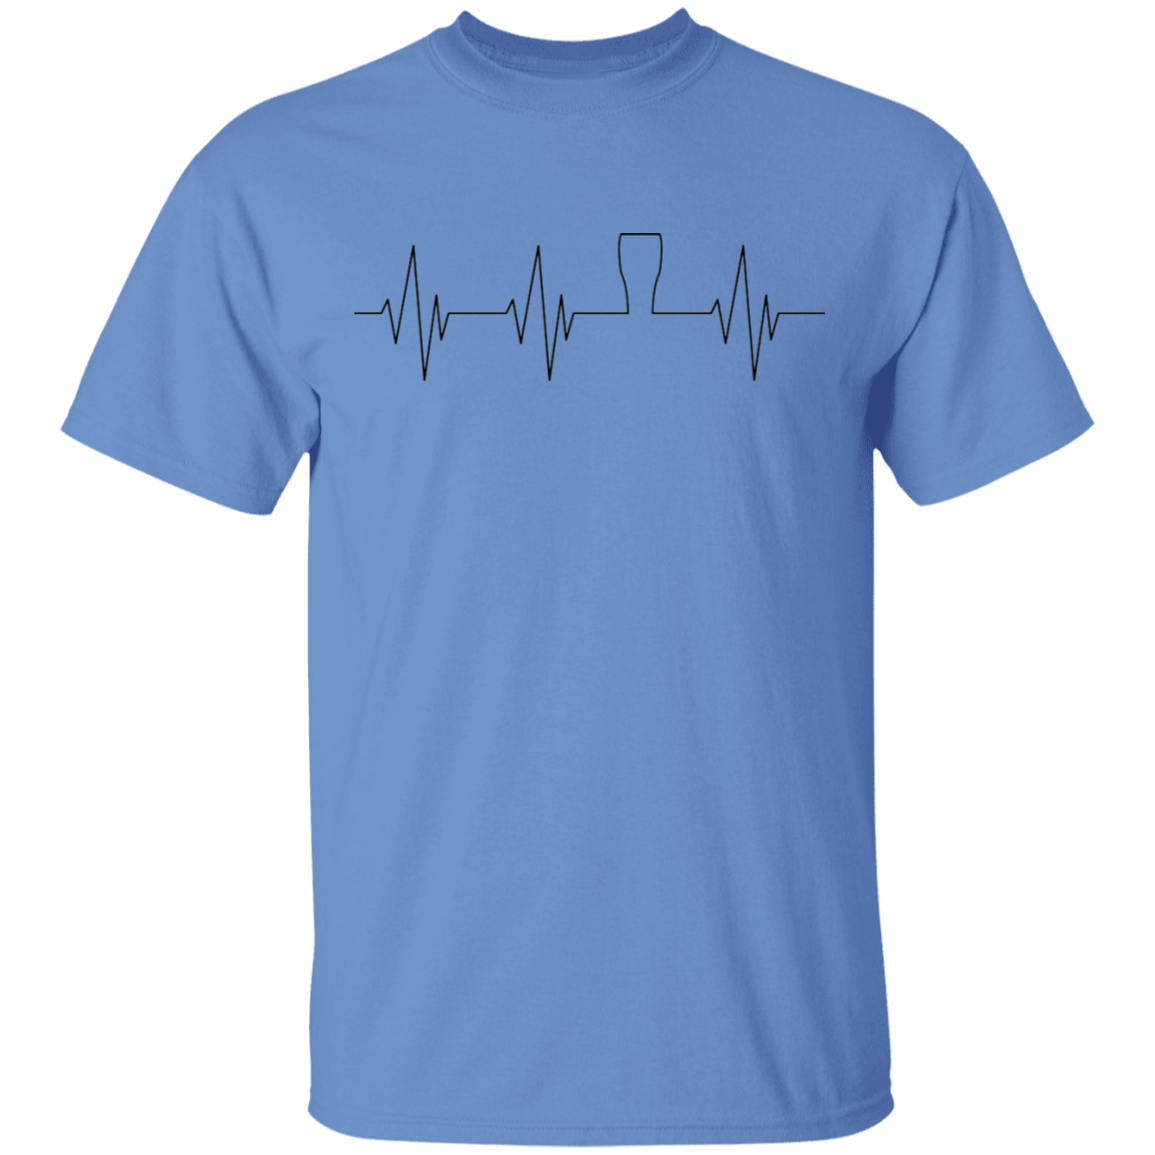 Beer Heartbeat T-Shirt | eBay